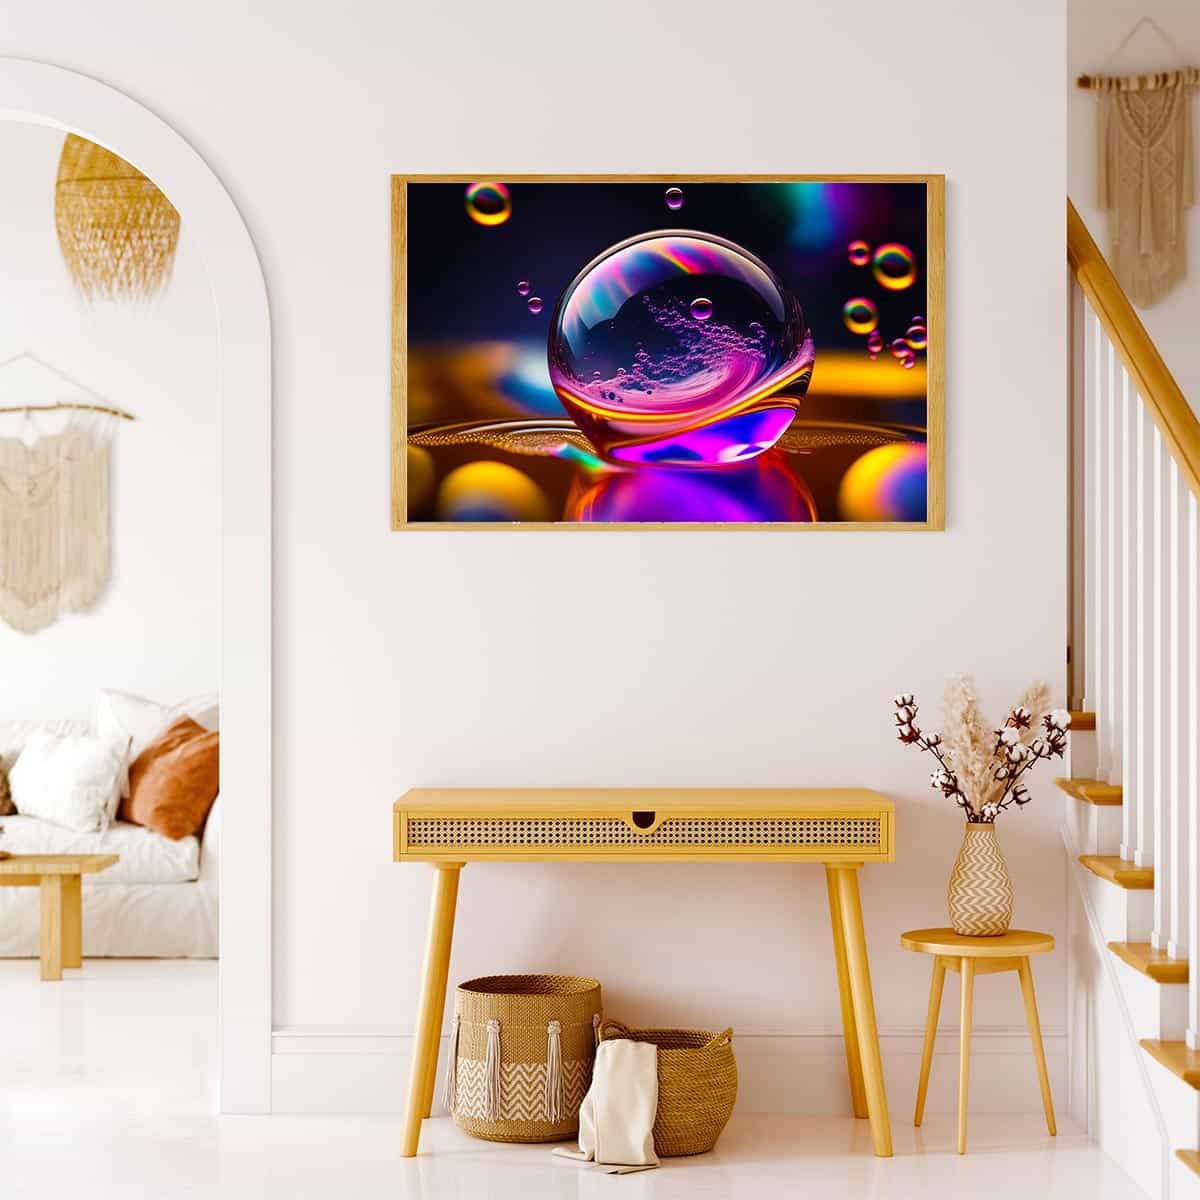 Diamond Painting - Wassertropfenkugel - gedruckt in Ultra-HD - Abstrakt, Horizontal